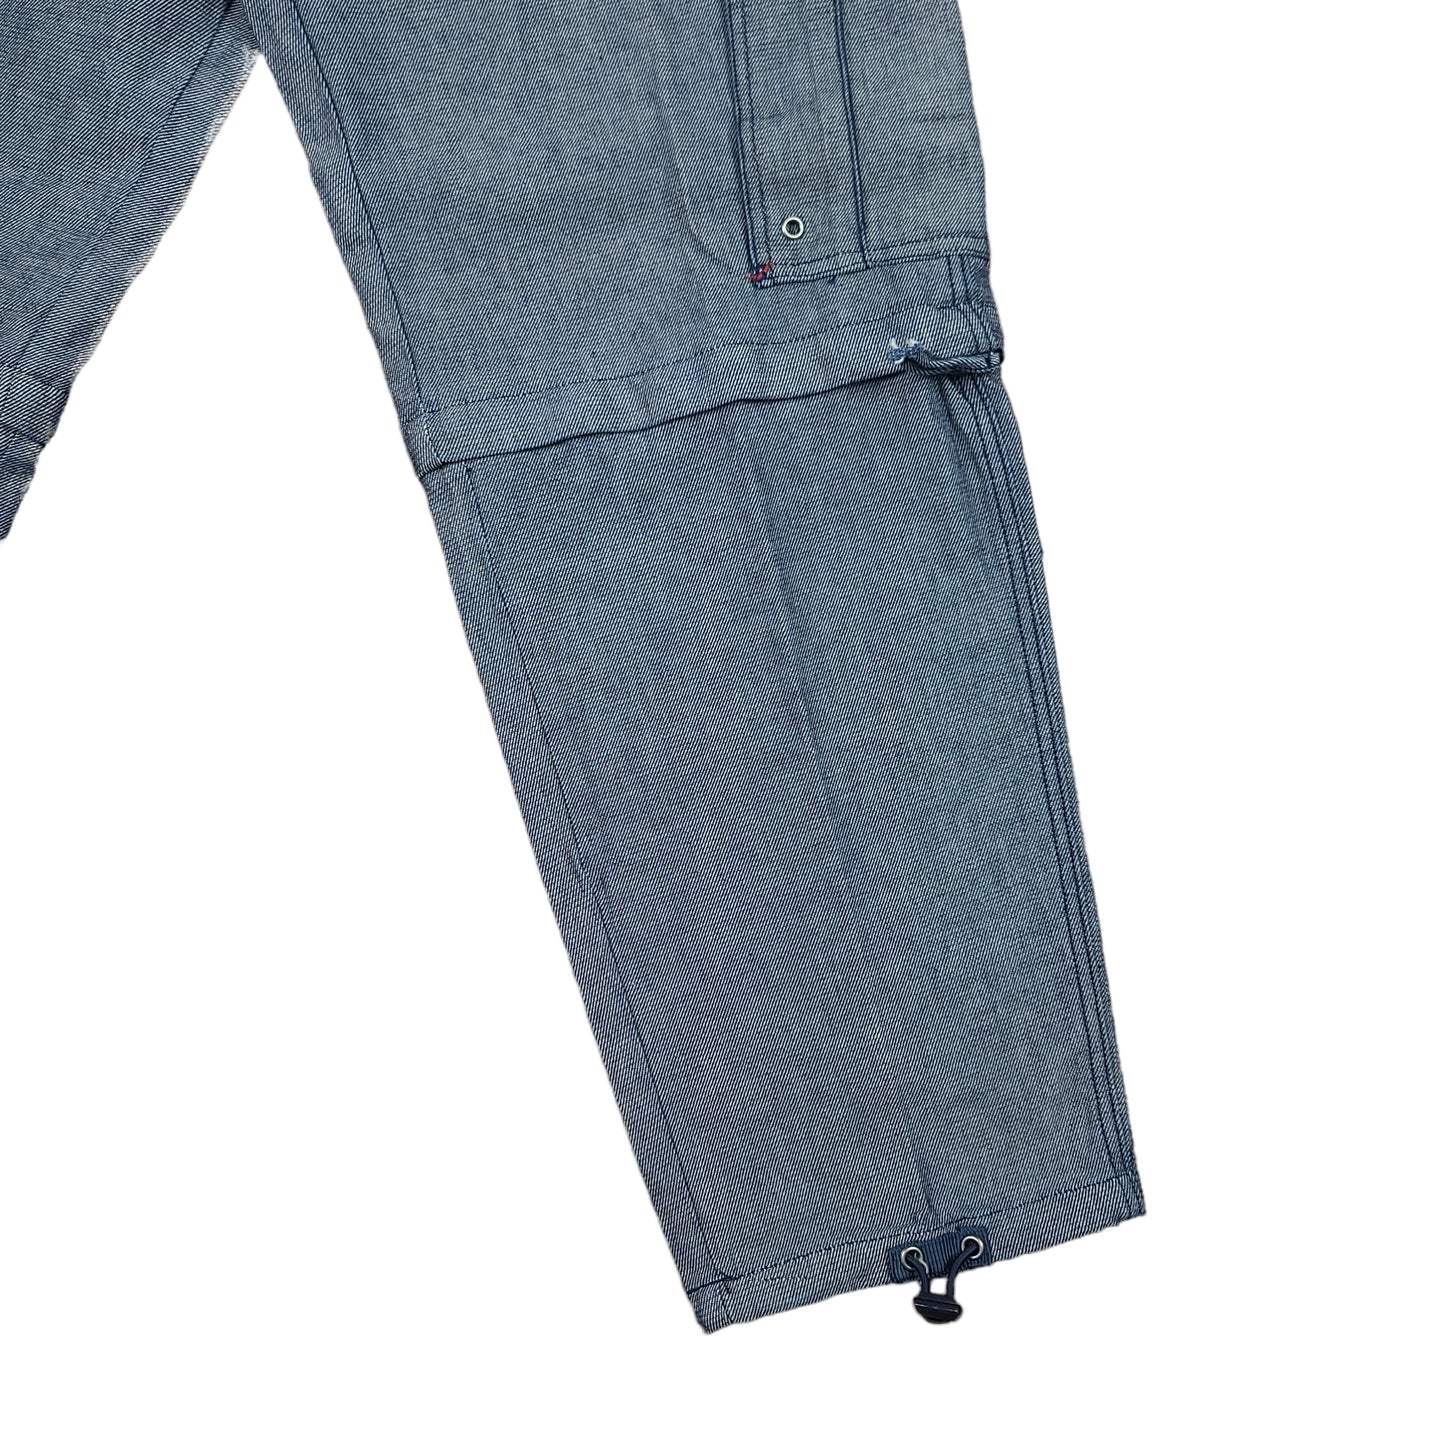 Vintage Y2K Paco Sport Blue Gray Convertible Pants